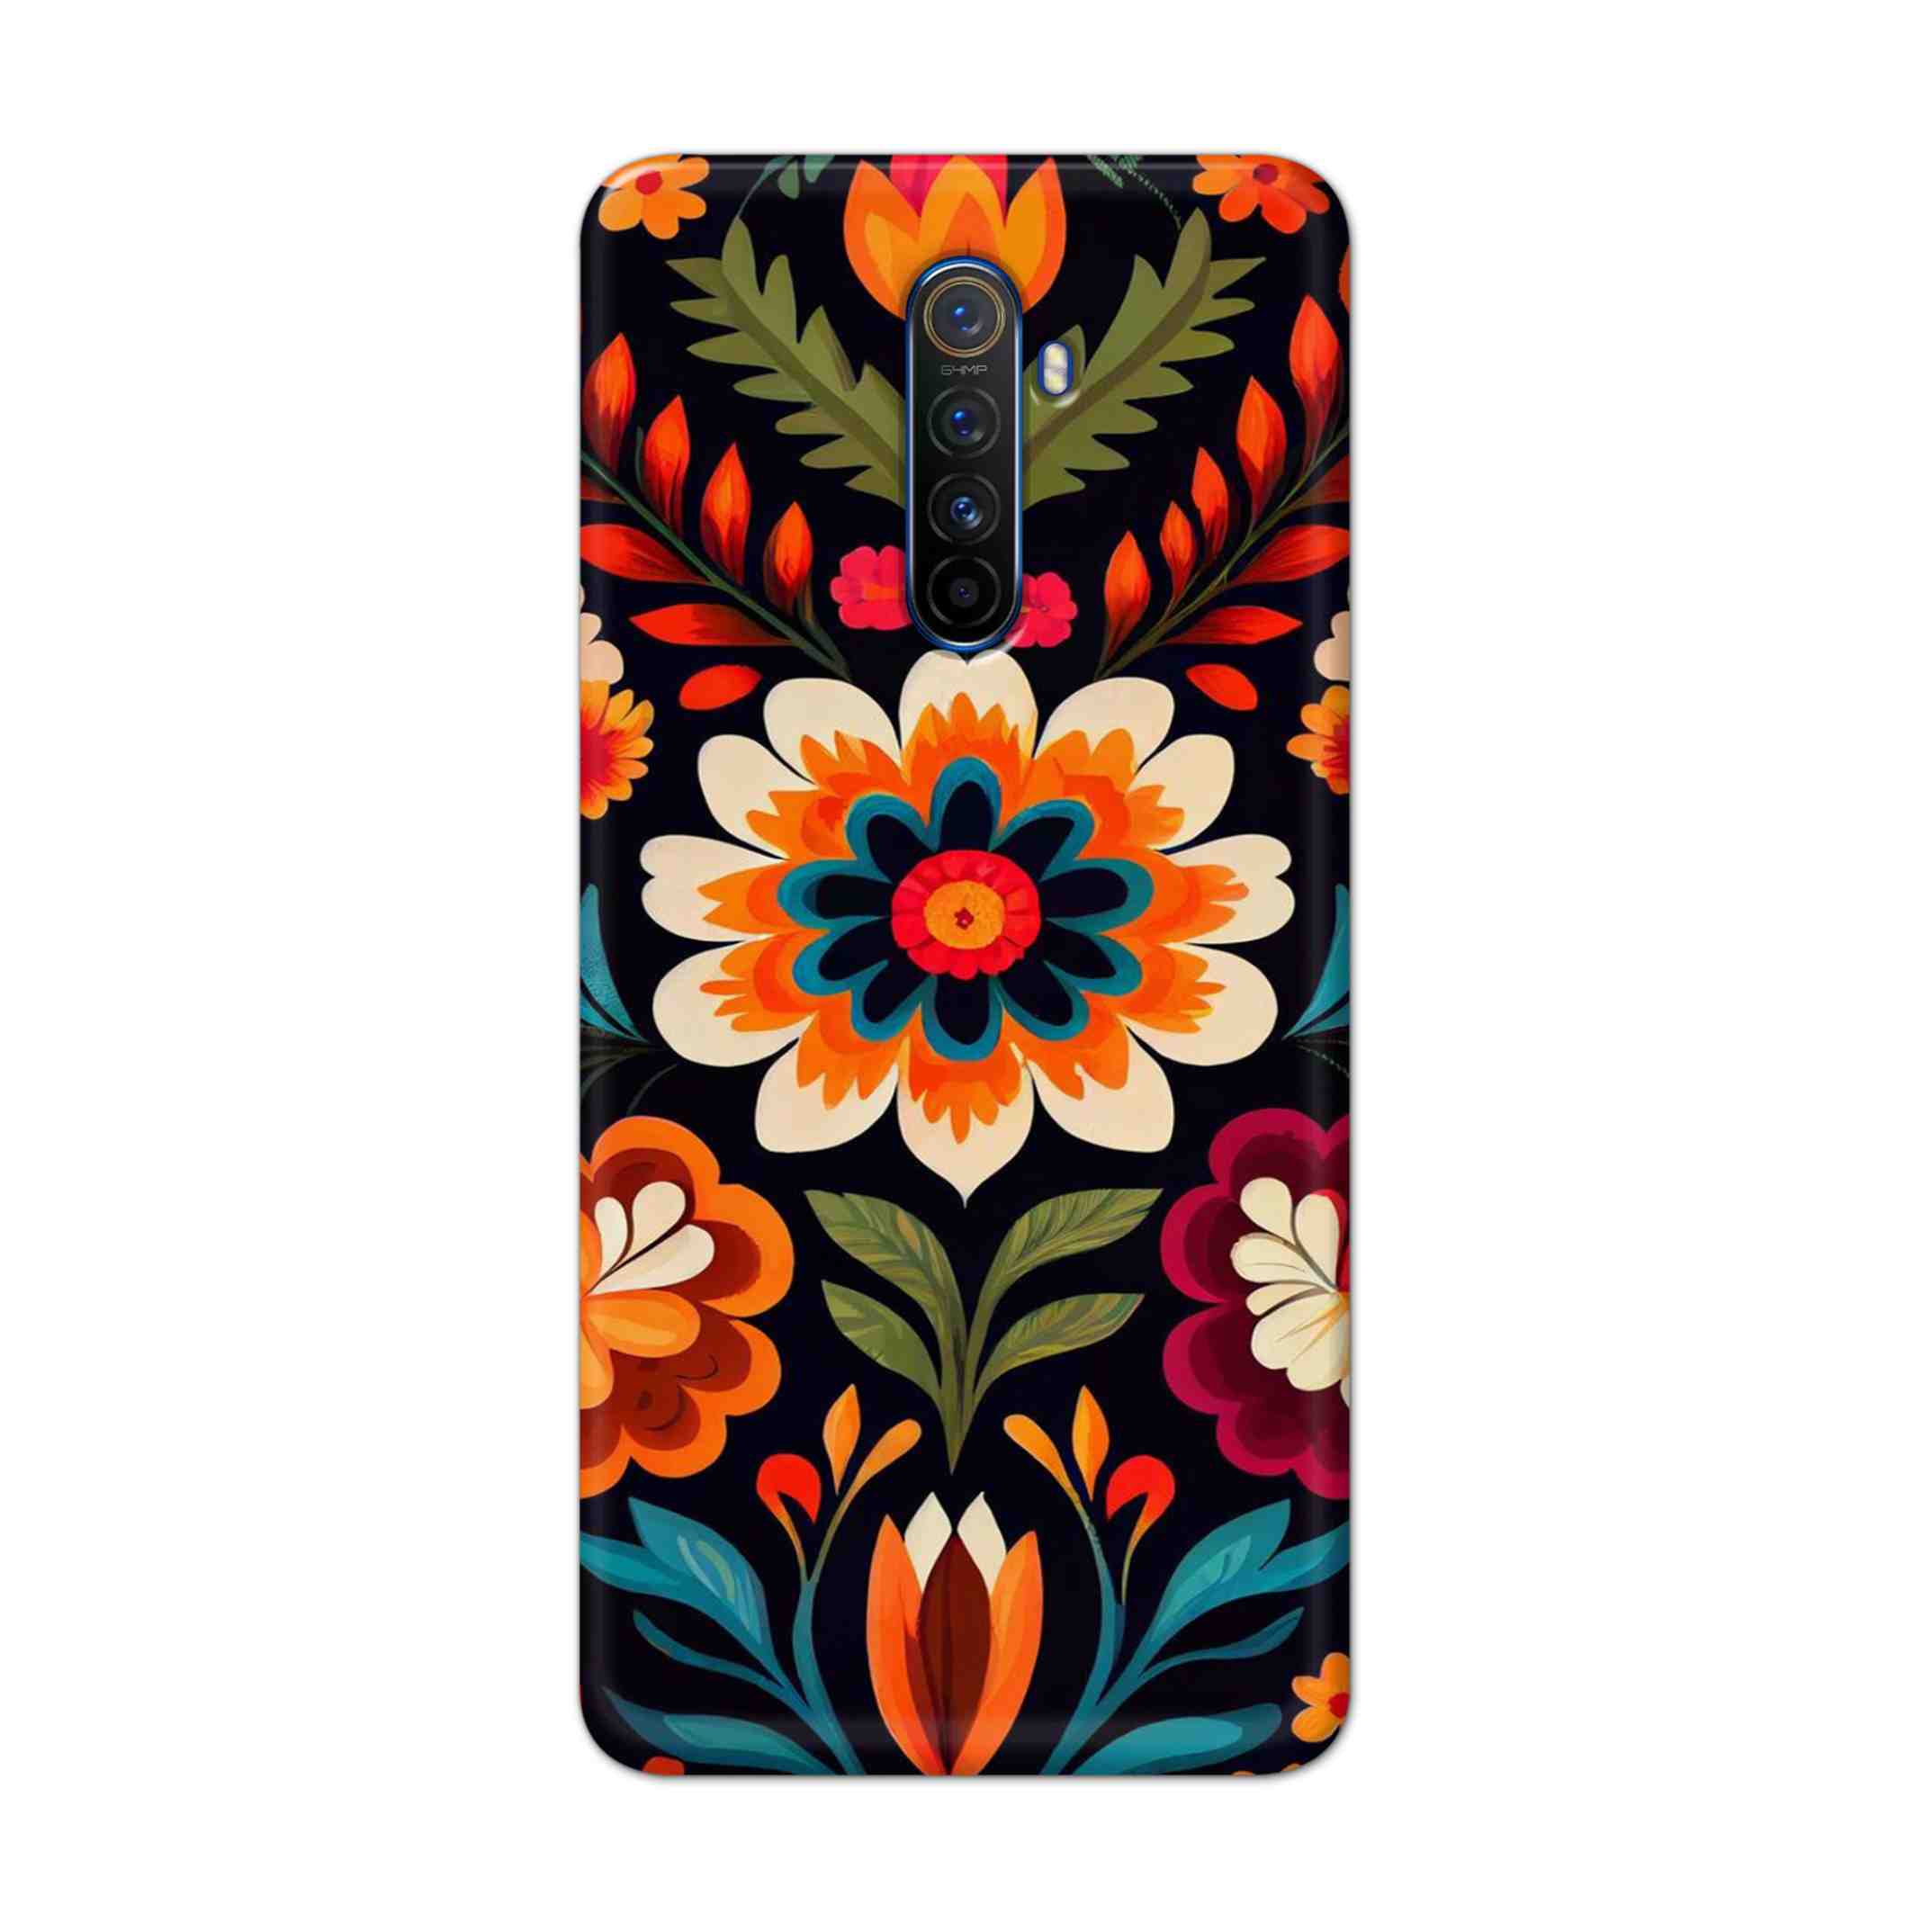 Buy Flower Hard Back Mobile Phone Case Cover For Realme X2 Pro Online